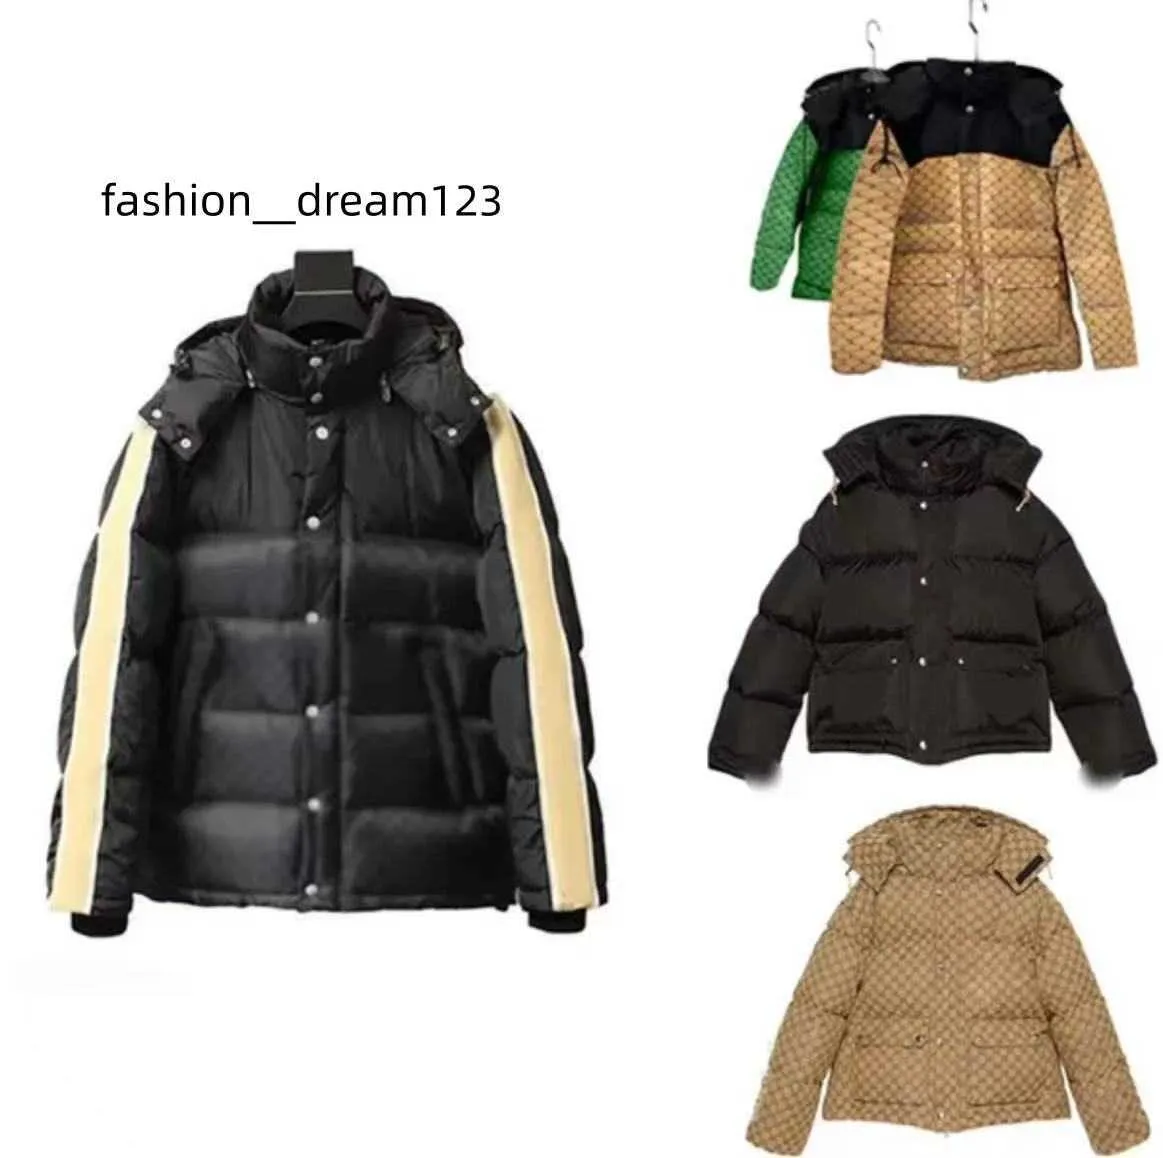 Mens Puffer Jackets Woman Designer Winter Jacket Down Coats Womens Fashion Outdoor Warm Feather Outfit outkläder Windbreakers Doudoune Homme Size M-XXXXXL